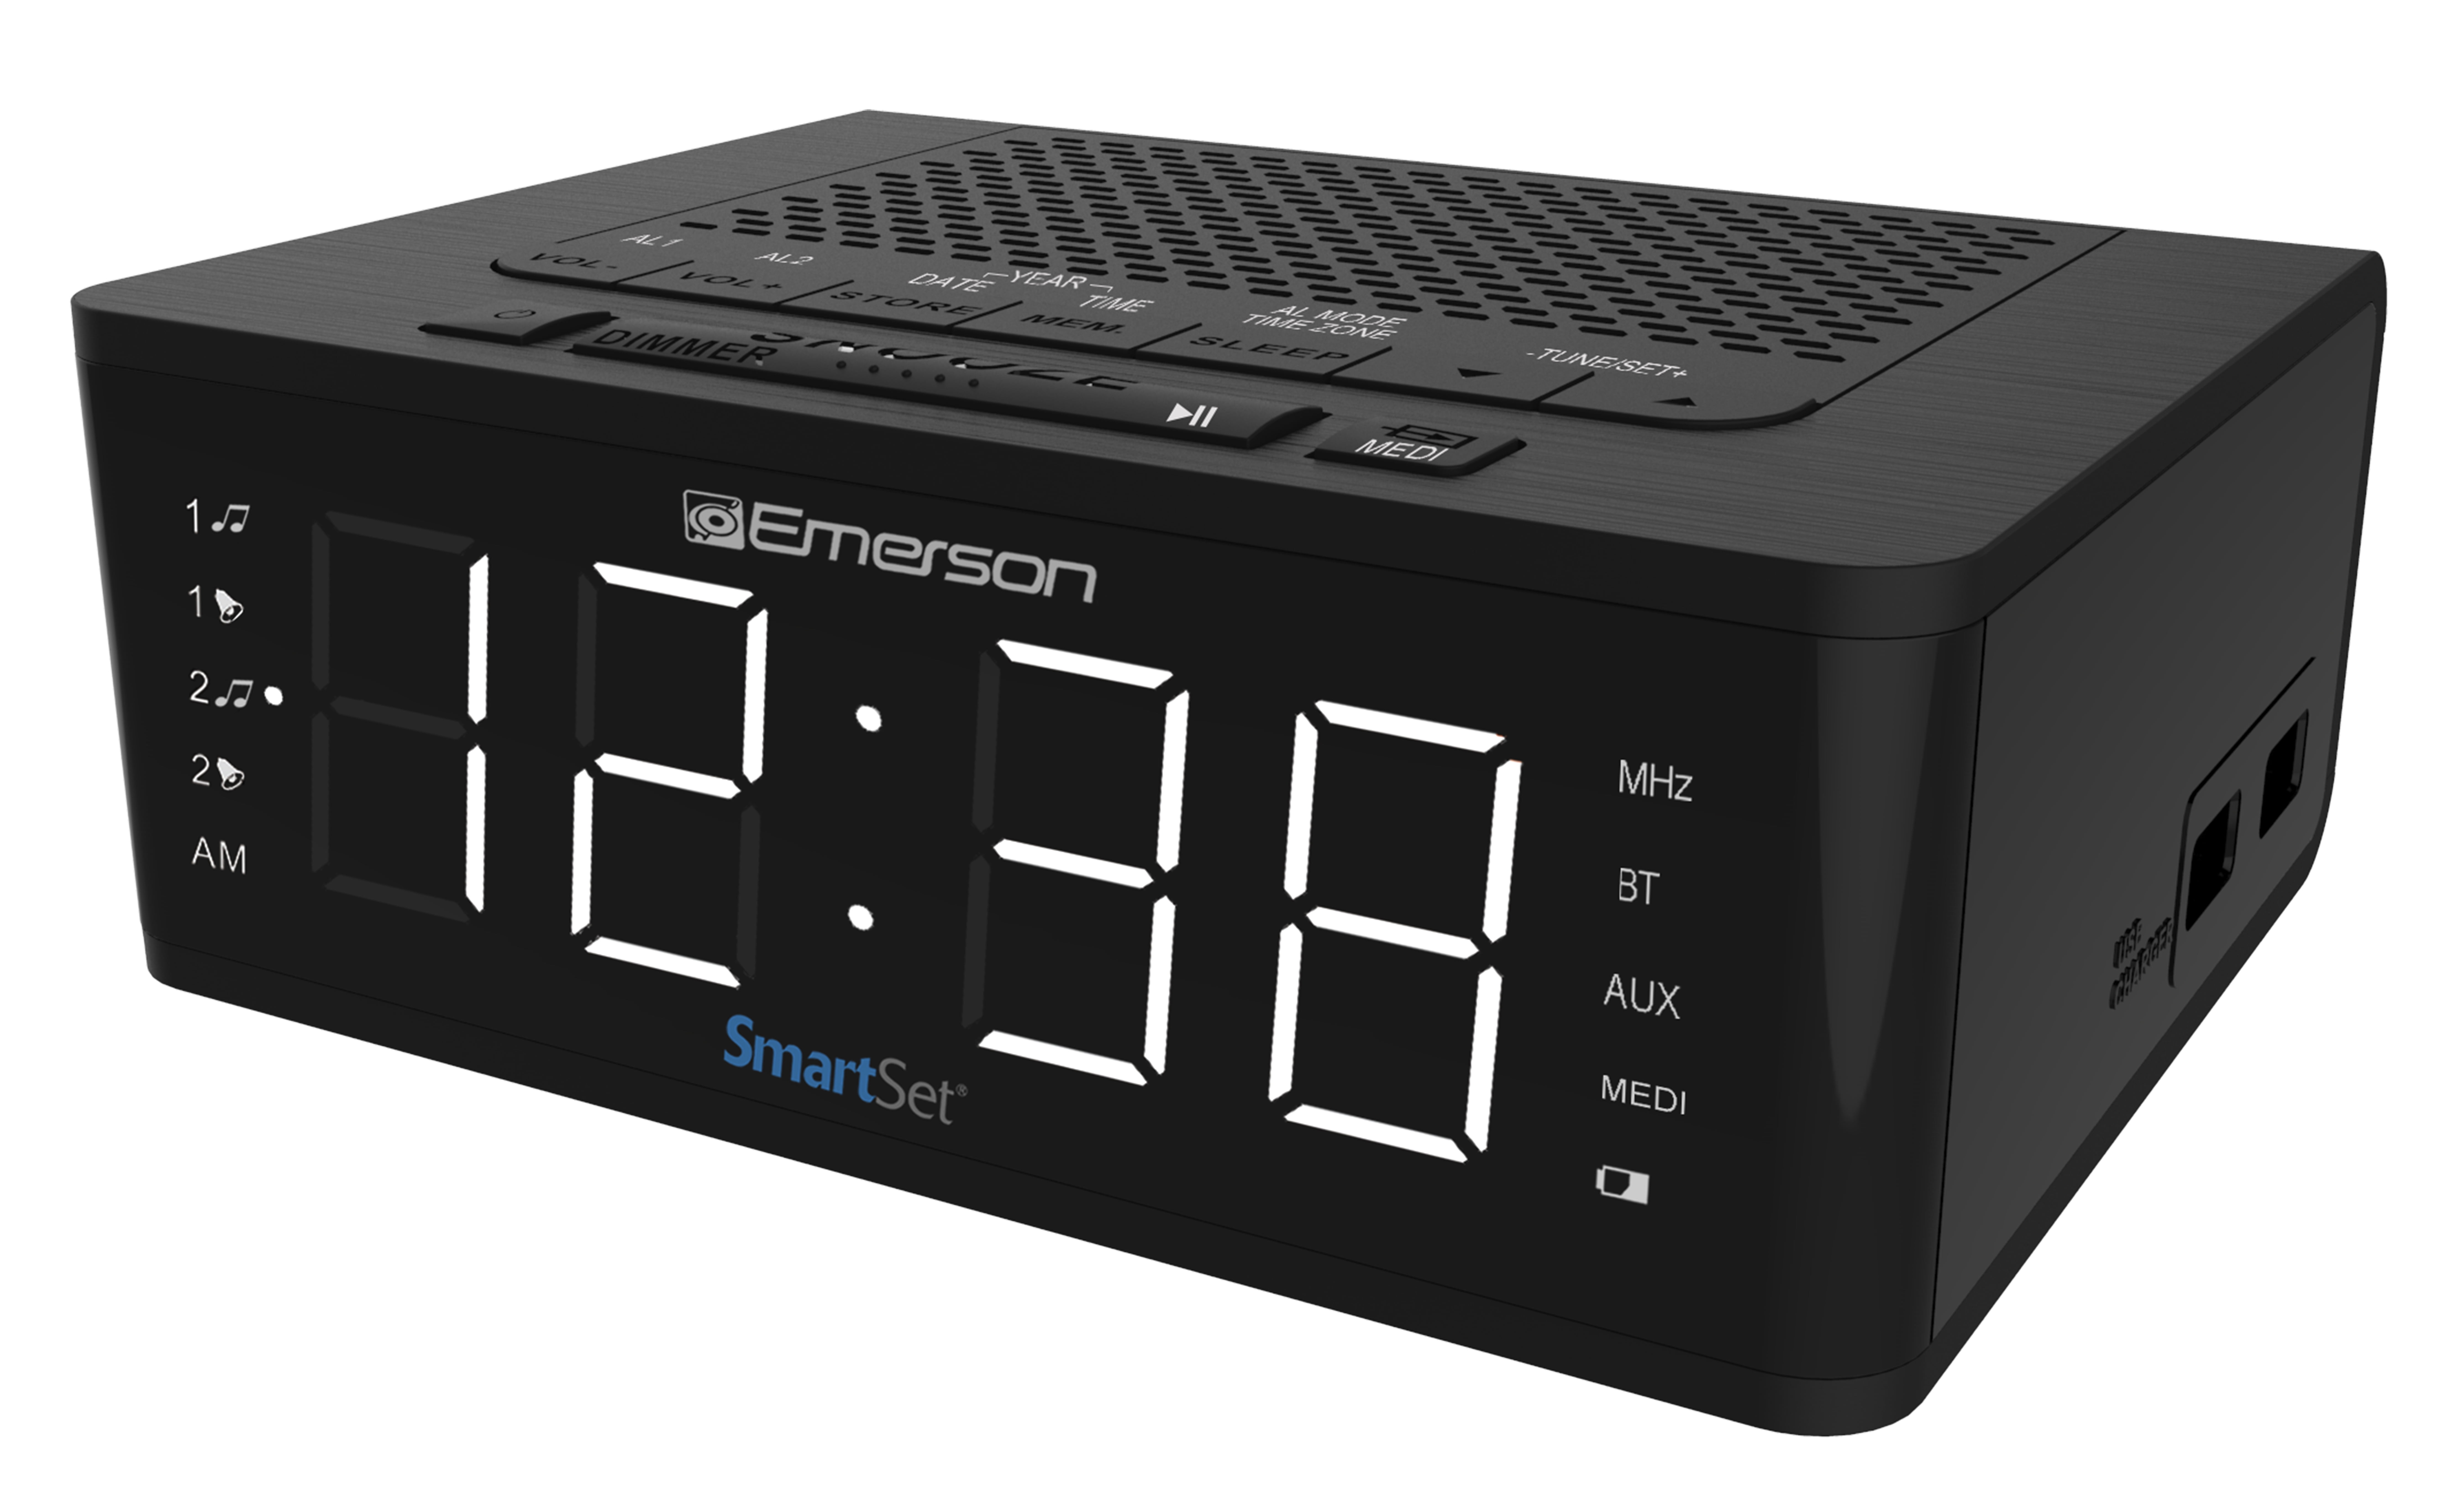 Details about   Smart Set Digital Alarm Clock Radio w/AM/FM,0.9" LED Large Display Snooze 